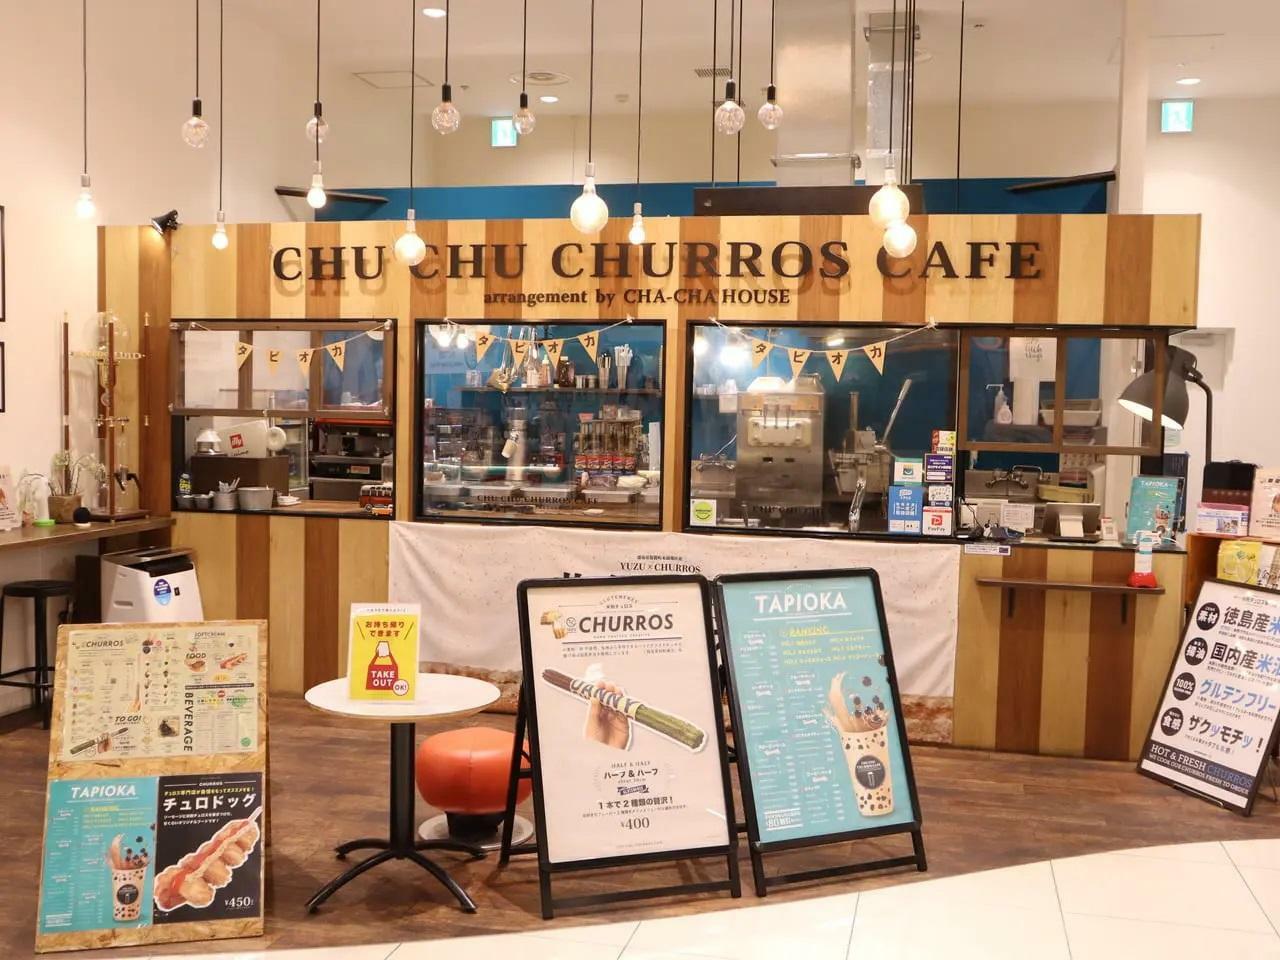 「CHU CHU CHURROS CAFE arrangement by CHA-CHA HOUSE」店舗外観。